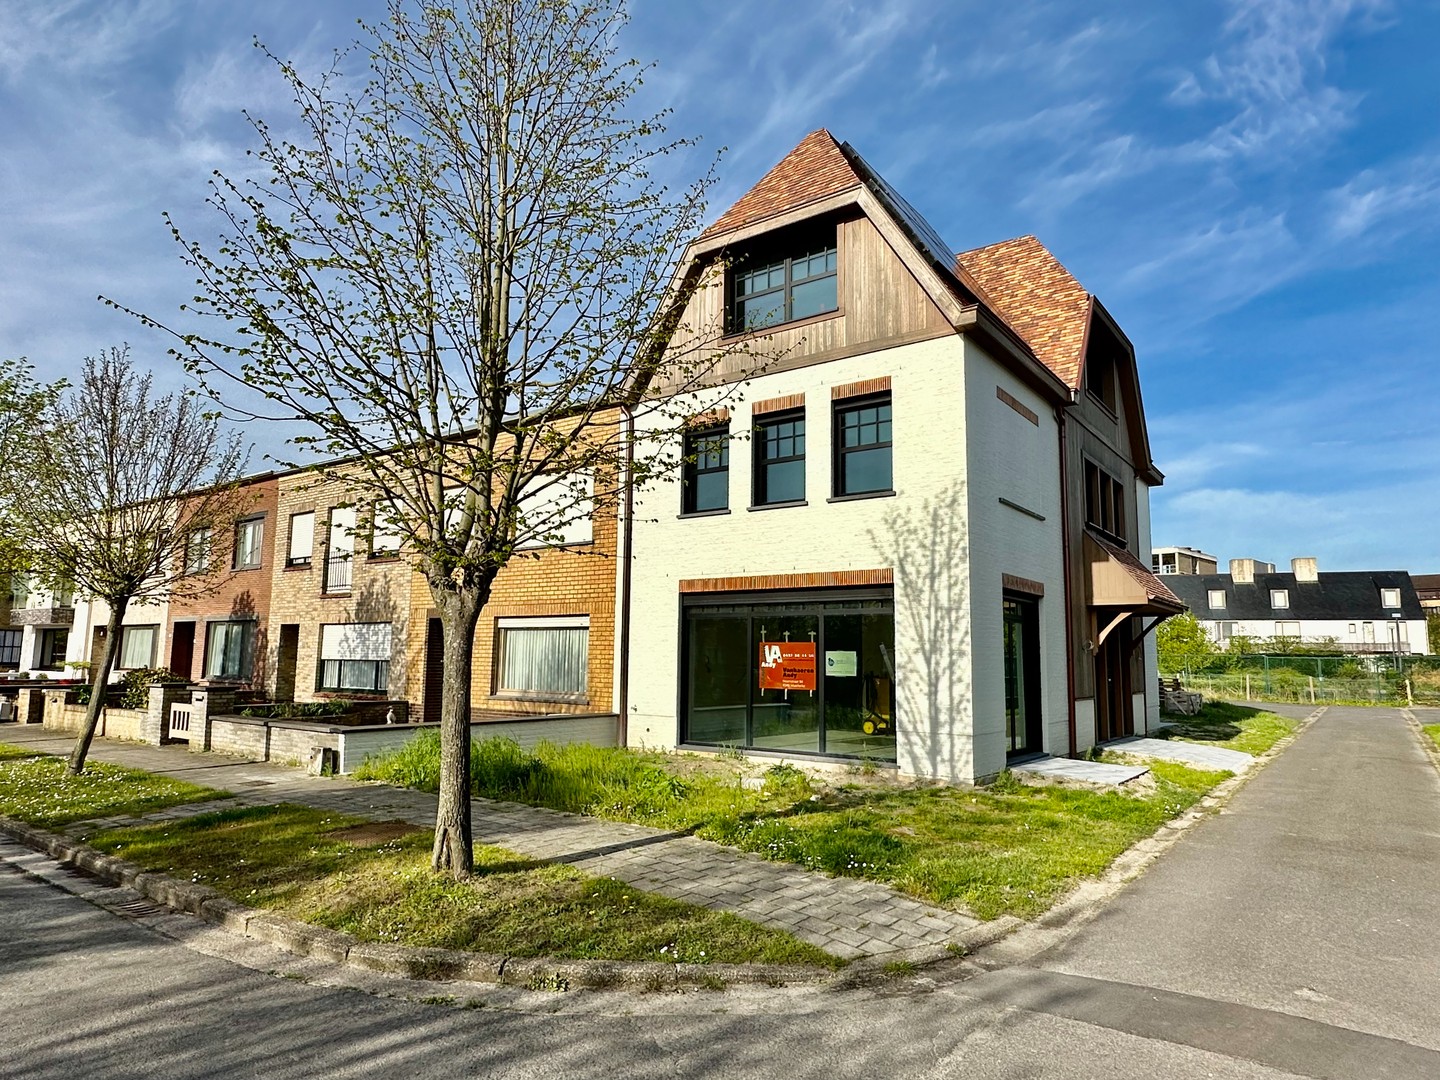 Te huur Knokke Real Estate, nieuwbouwvilla in Knokke 